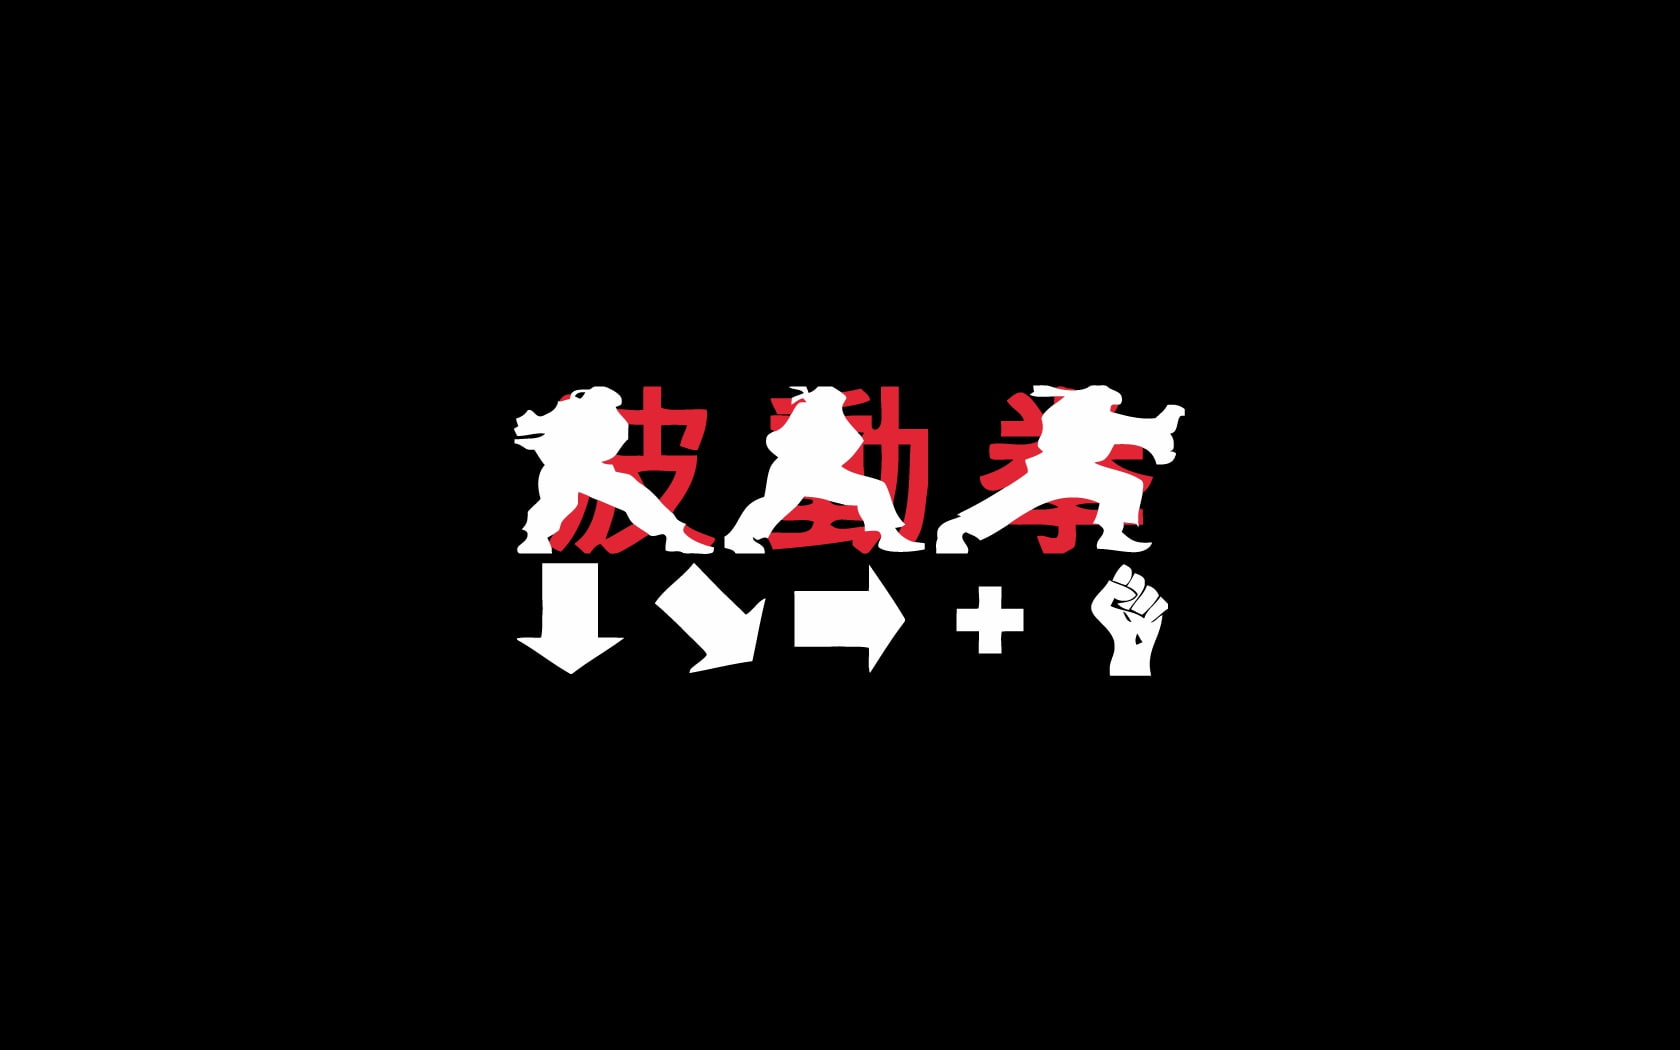 Free download | HD wallpaper: street fighter ryu hadouken 1680x1050 ...